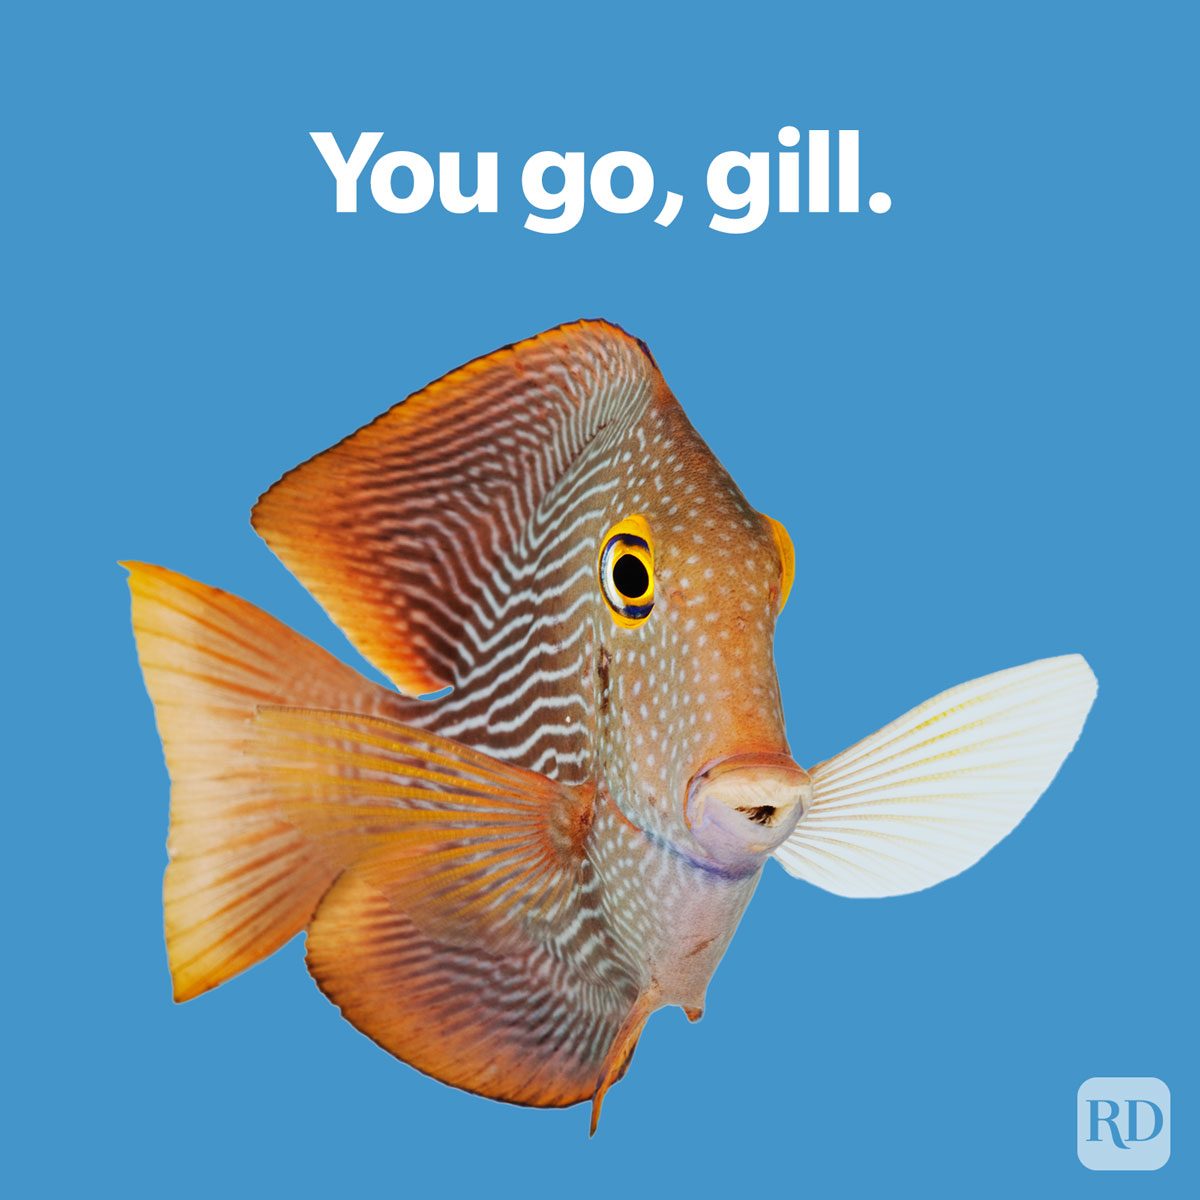 fish joke on blue background: You go, gill.